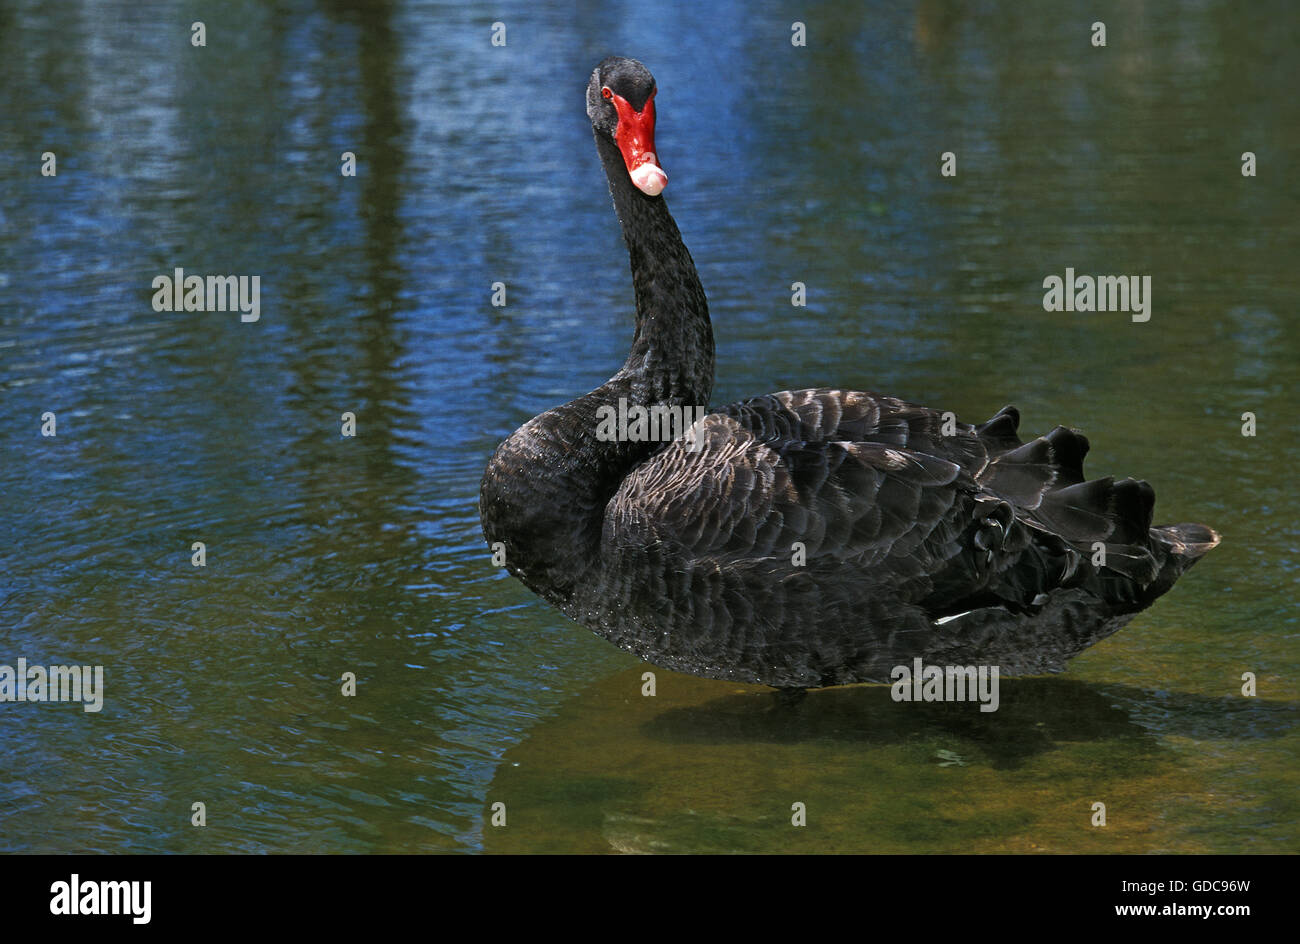 Black Swan, cygnus atratus, Adult in Water Stock Photo